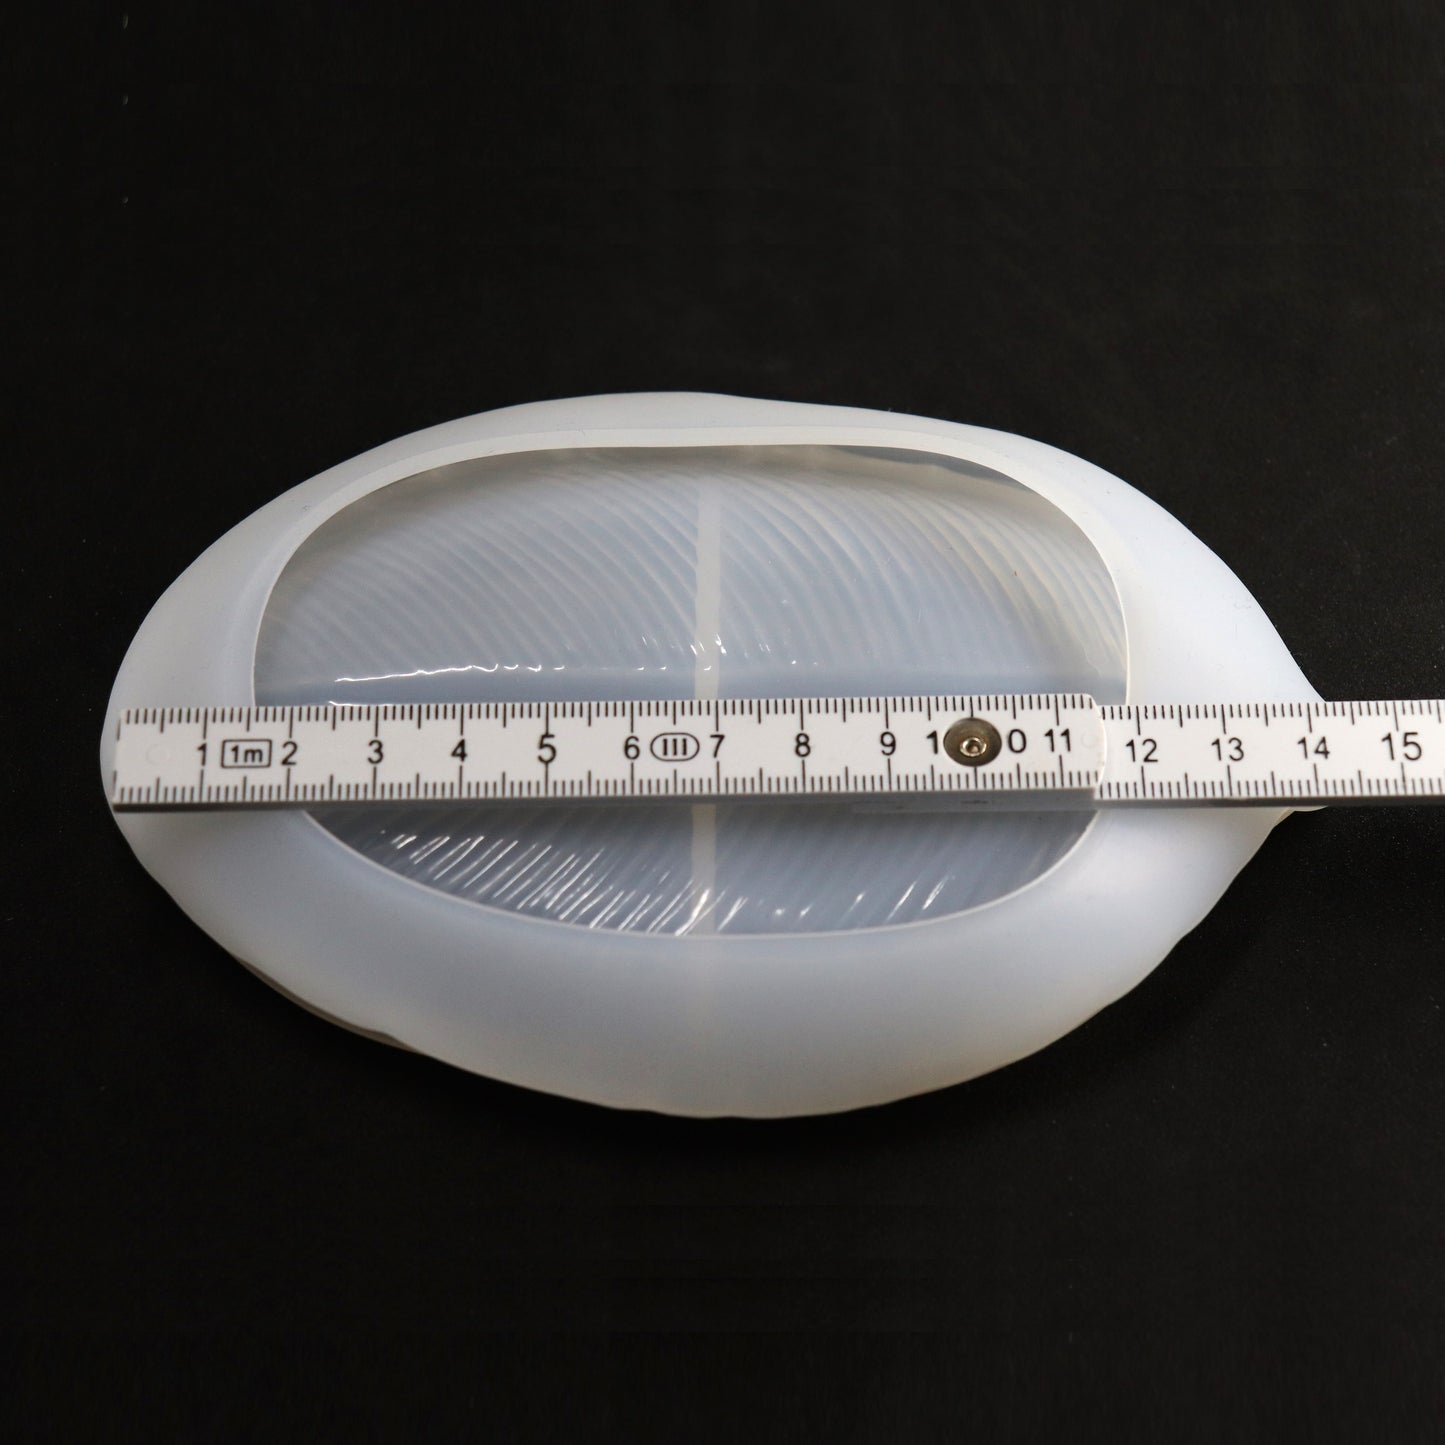 Silikonform Blatt Schale Gießform für Raysin oder Epoxidharz ca. 14 x 9 cm